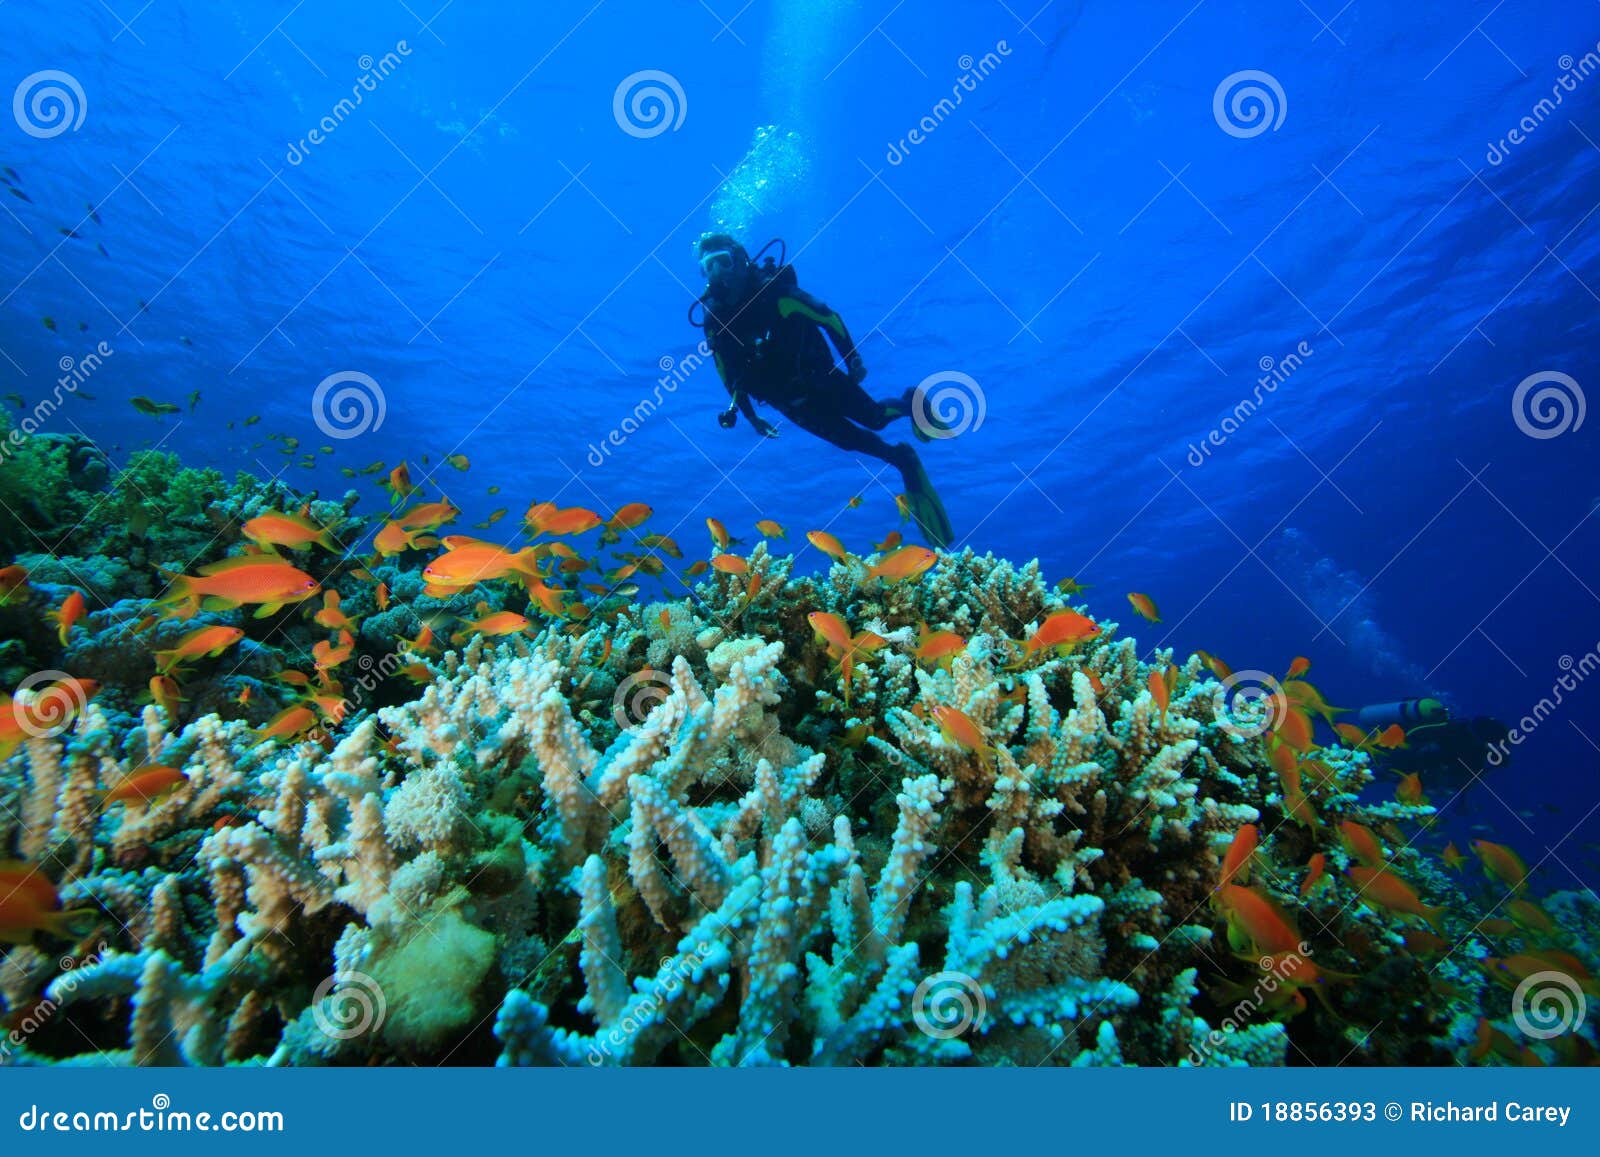 Scuba Divers Explore Coral Reef Stock Photos - Image: 18856393